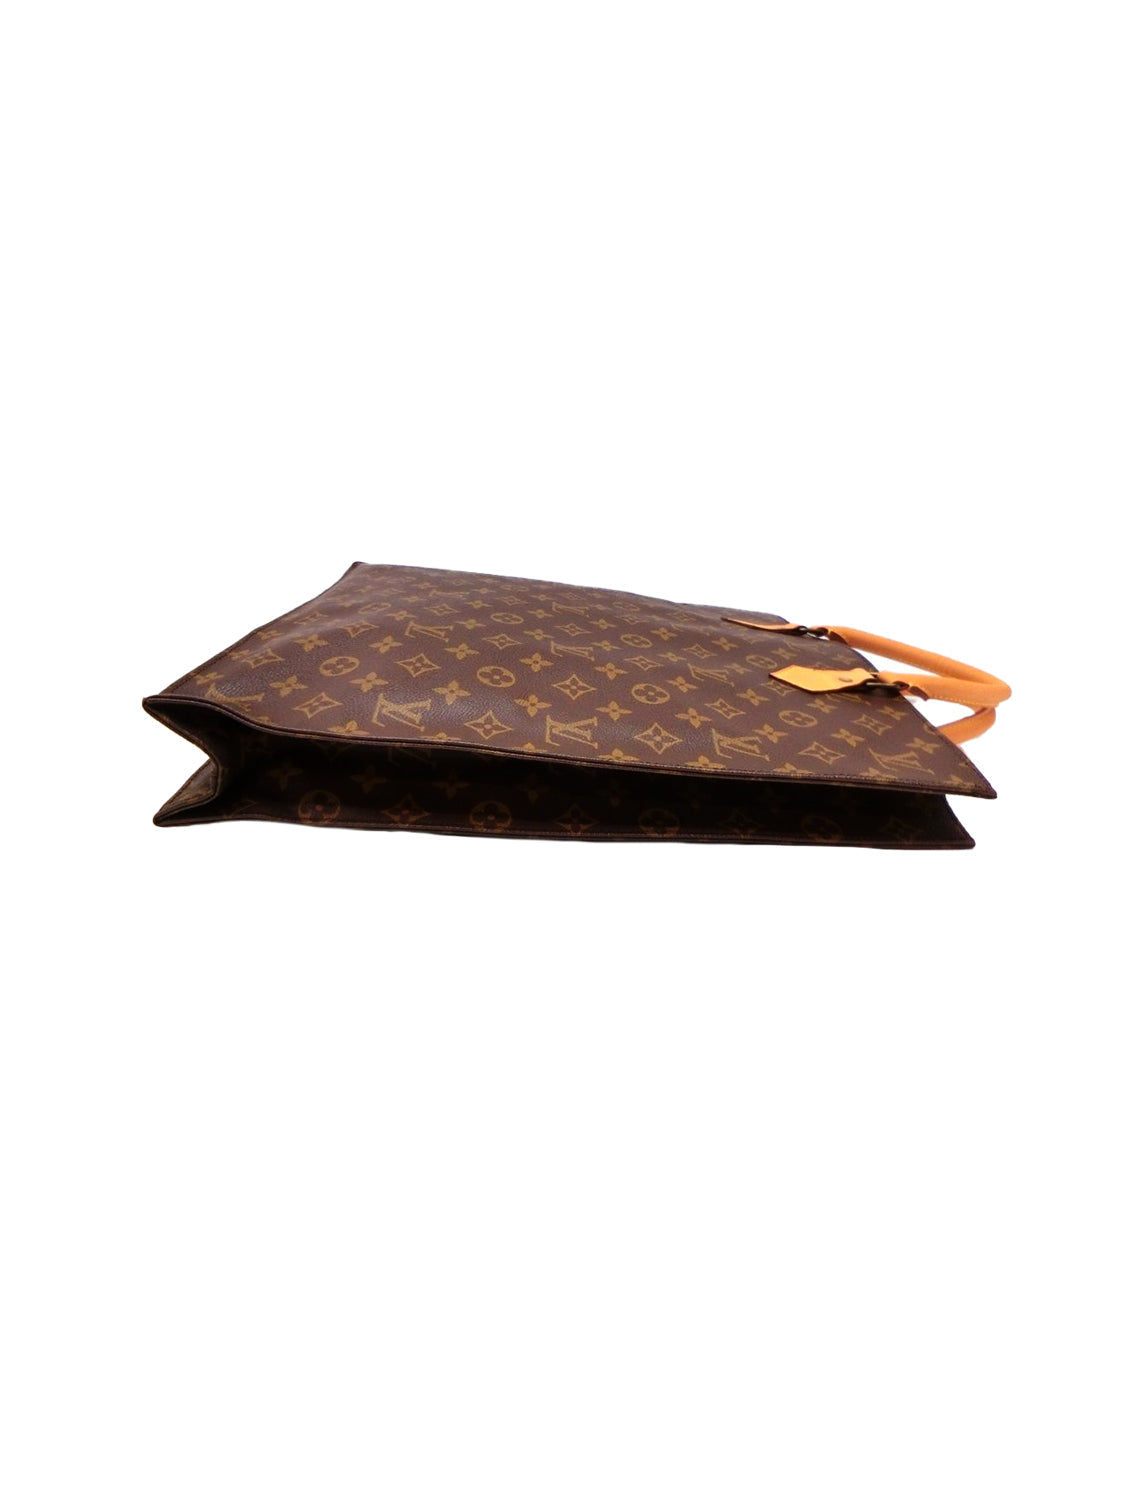 Authentic LOUIS VUITTON Sac Plat Monogram Tote Shopping Bag Purse #42030